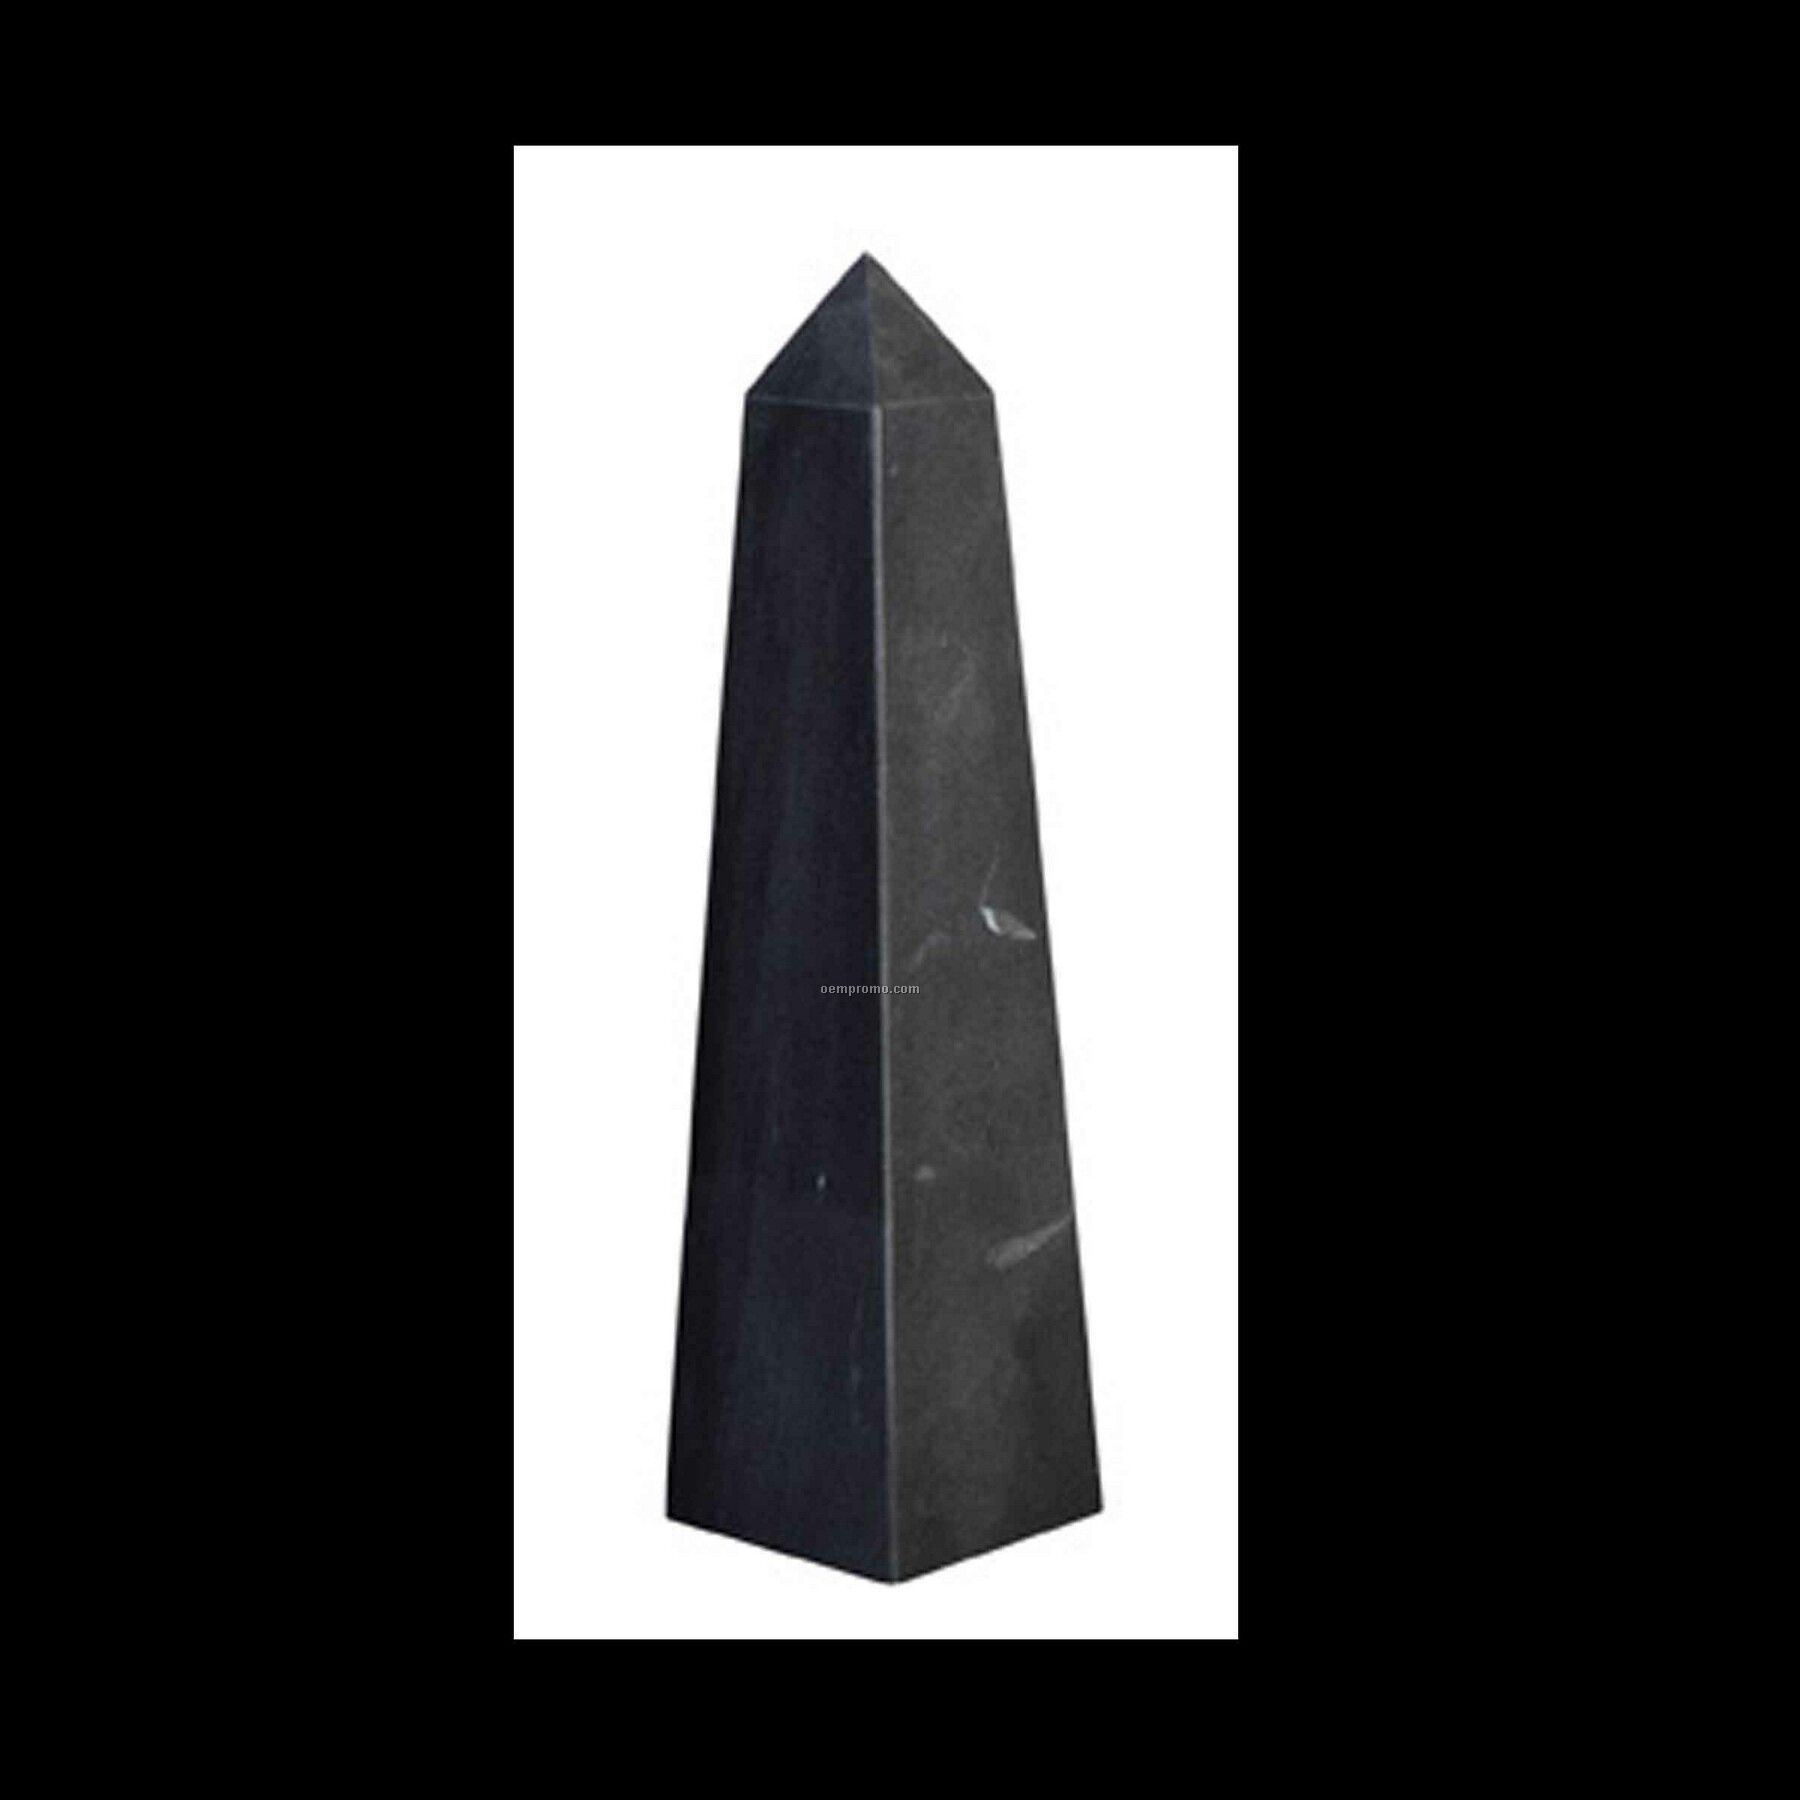 Medium-large Obelisk Pinnacle Award